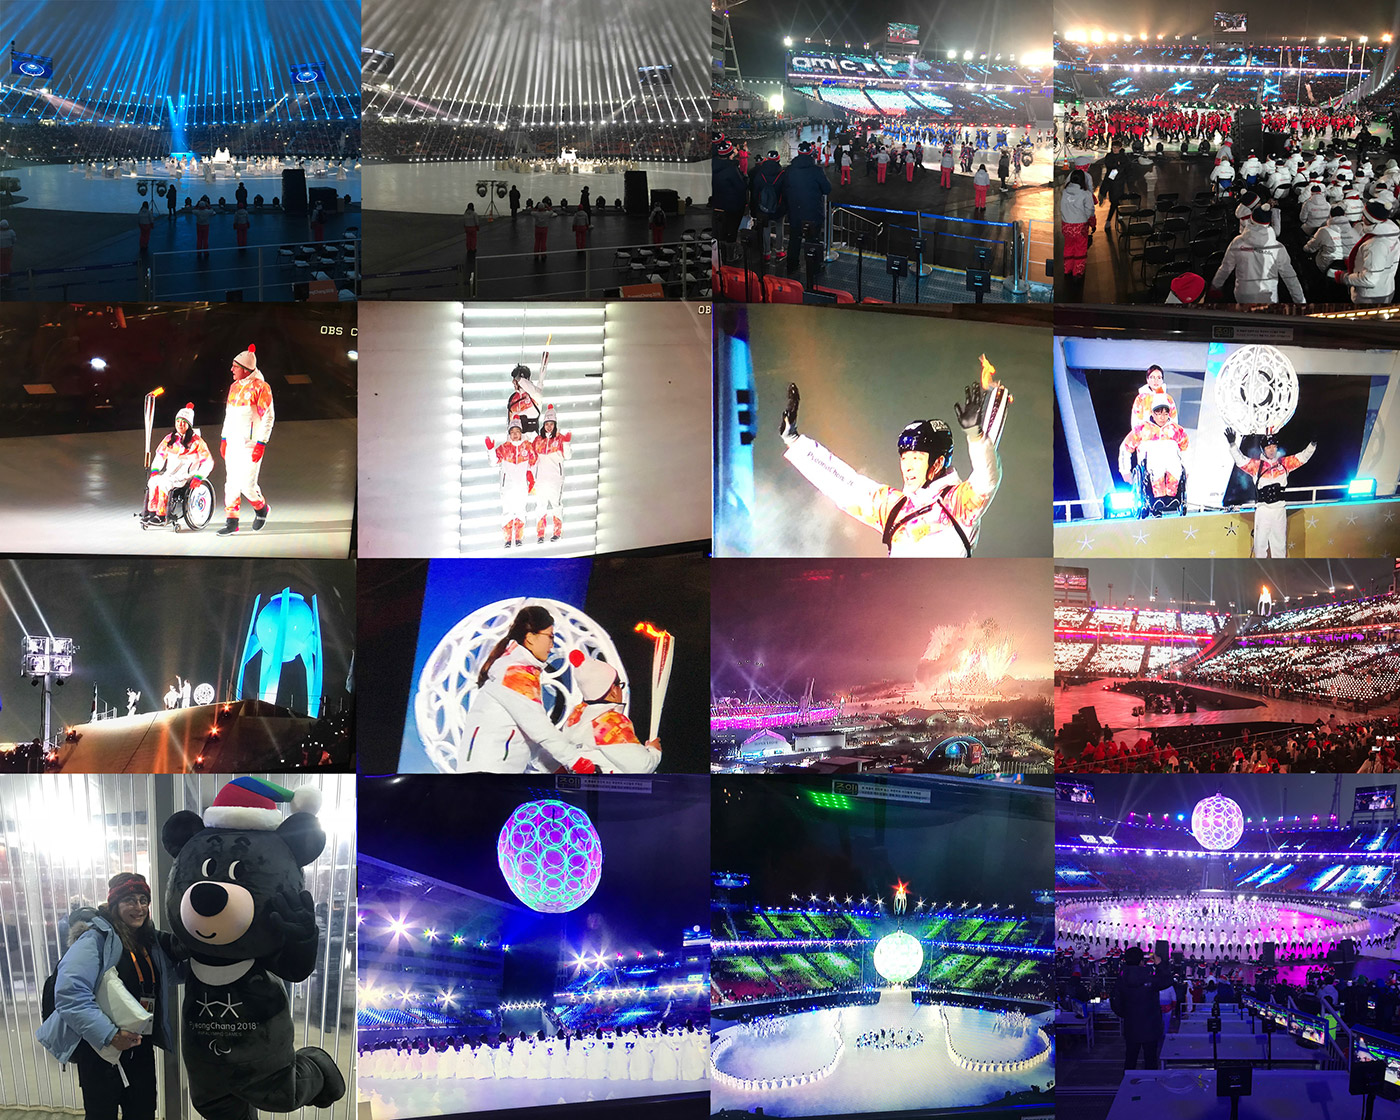 PyeongChang Paralympics 2018 Photo Montage 3 - Opening Ceremony